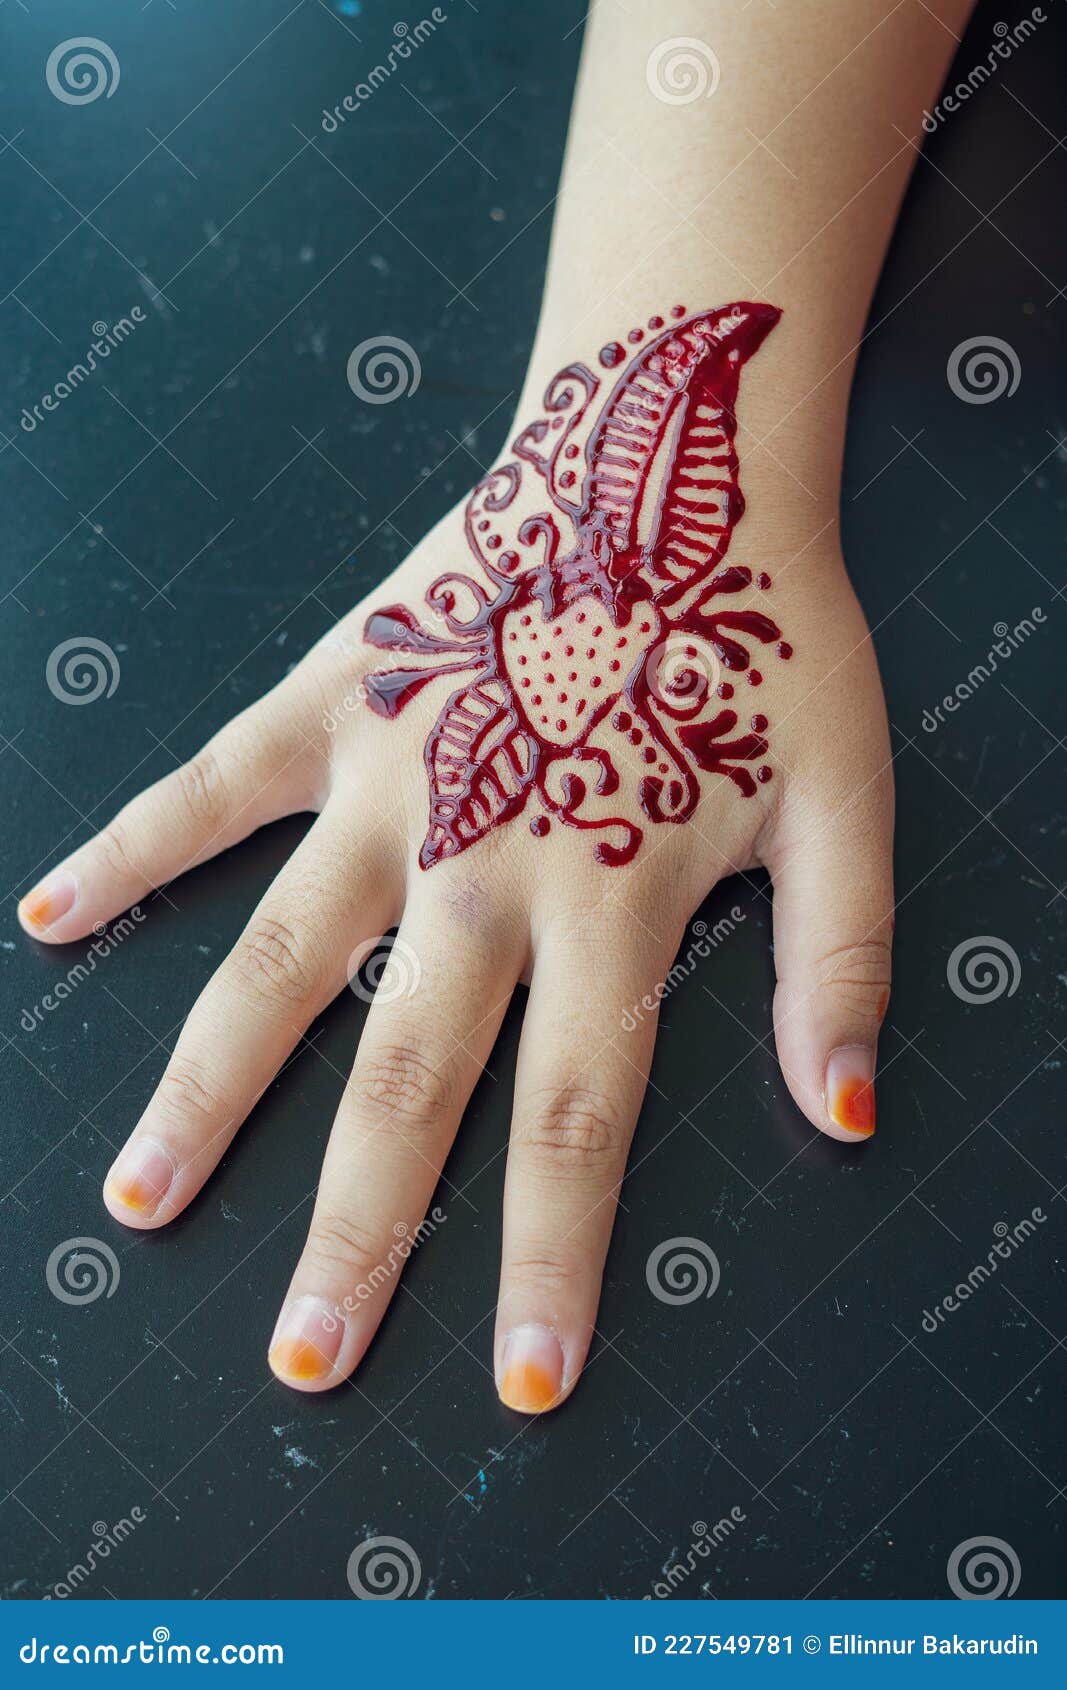 https://thumbs.dreamstime.com/z/henna-ornamente-auf-m%C3%A4dchen-hand-n%C3%A4he-227549781.jpg